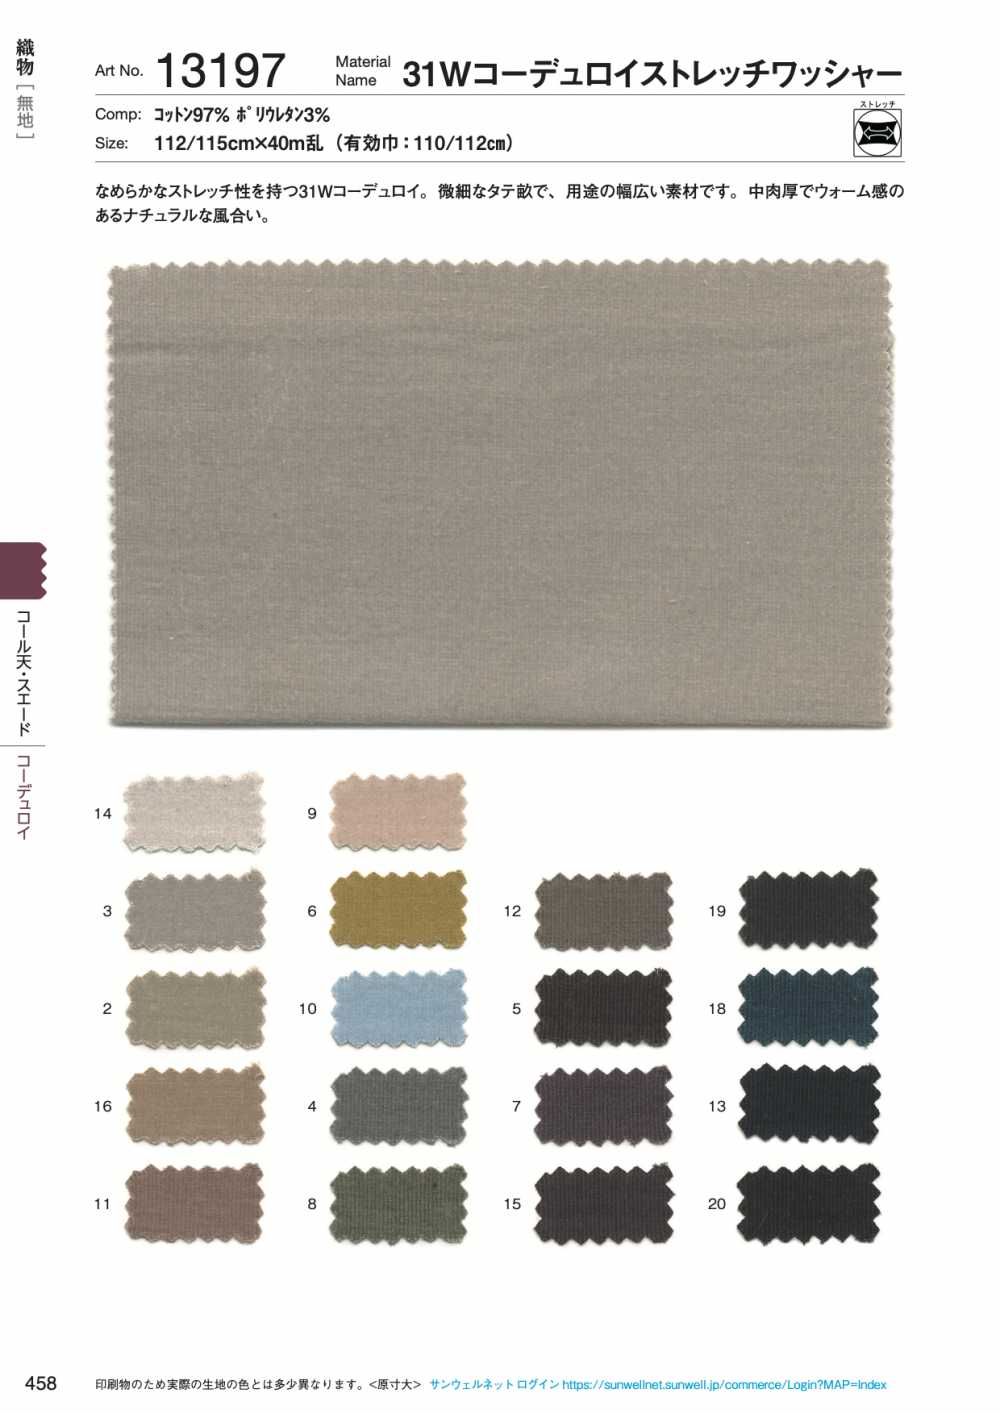 13197 31W Corduroy Stretch Washer[Textile / Fabric] SUNWELL